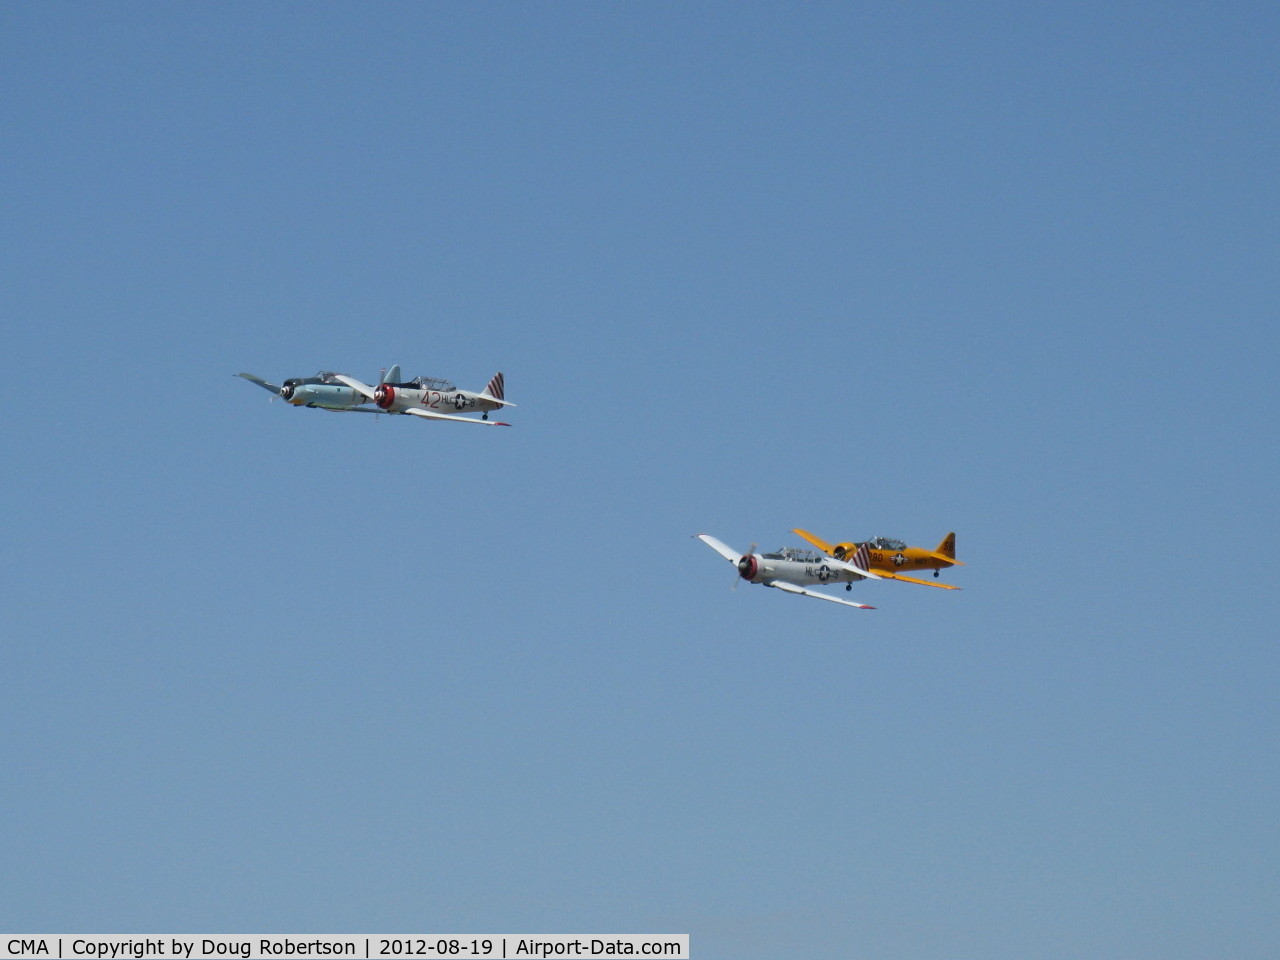 Camarillo Airport (CMA) - Condor Squadron in formation flight over 26, Wings Over Camarillo Airshow 2012